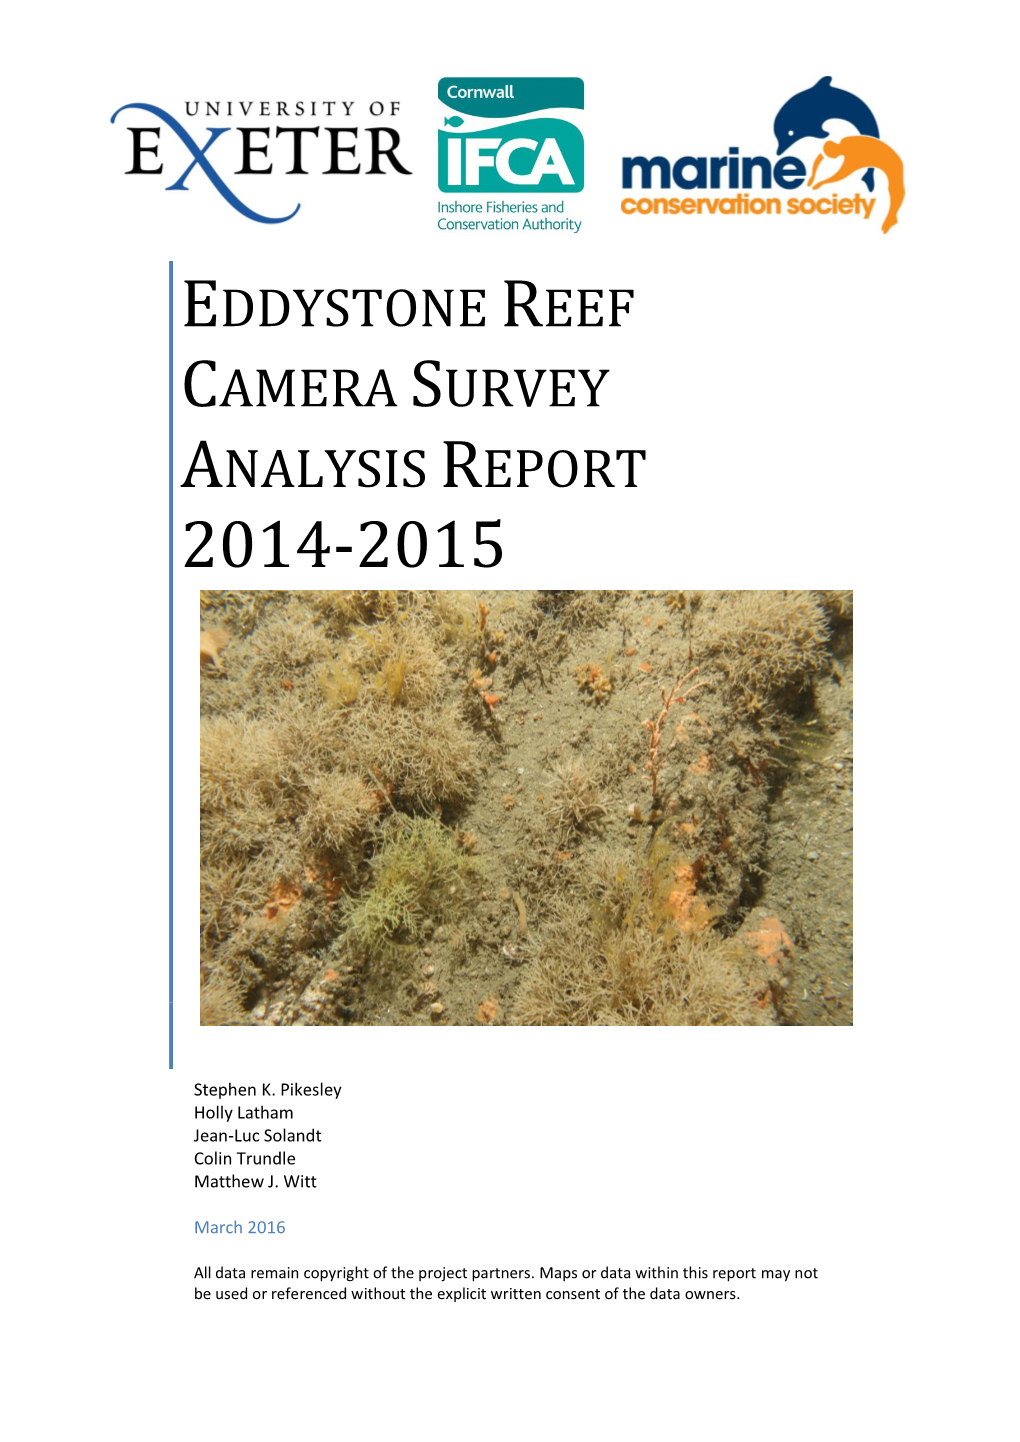 Eddystone Reef Camera Survey Analysis Report 2014-2015